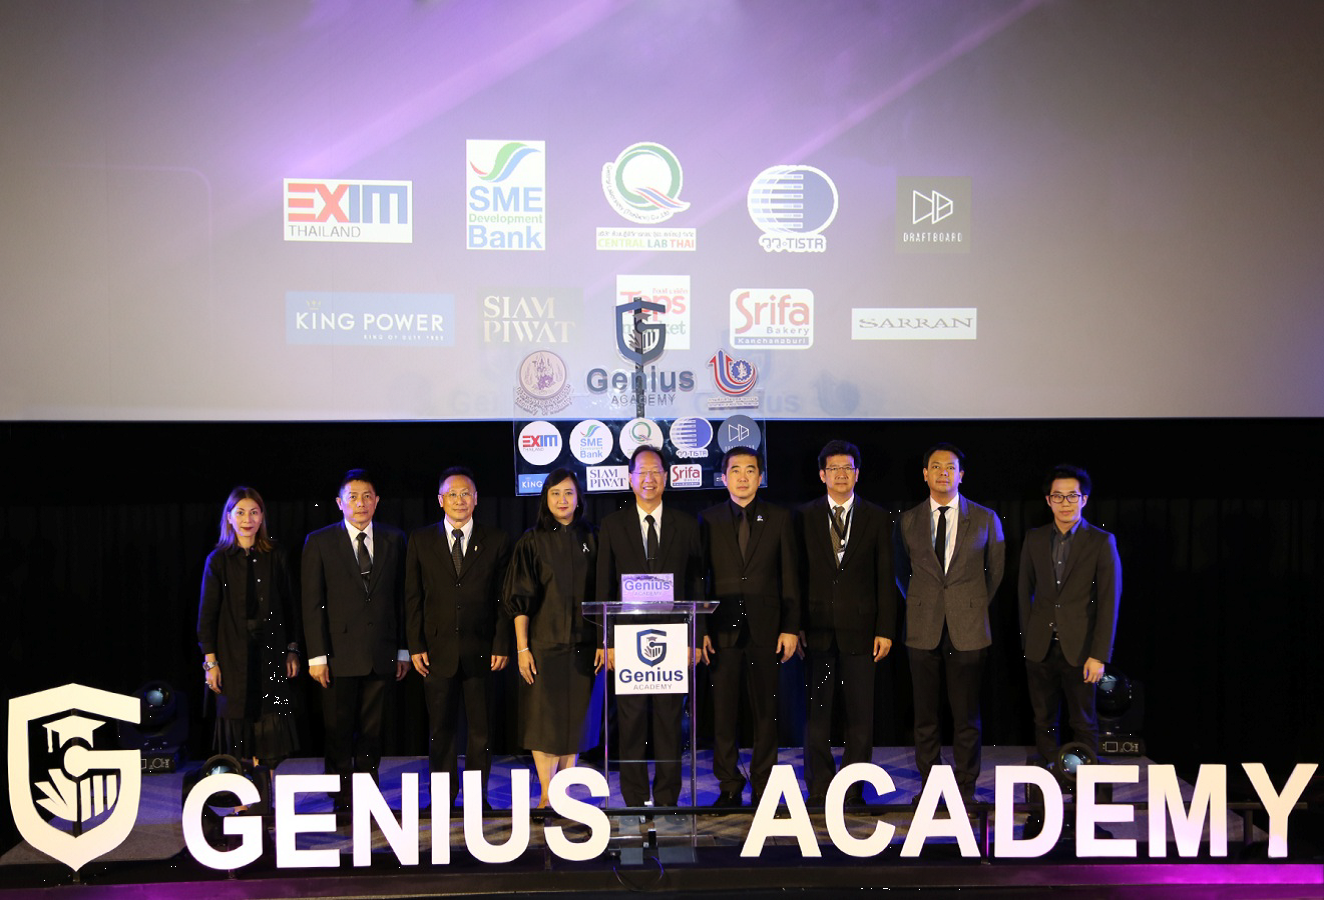 EXIM Thailand Joins Genius Academy 2017 to Promote Thai Entrepreneurs’ Business Excellence